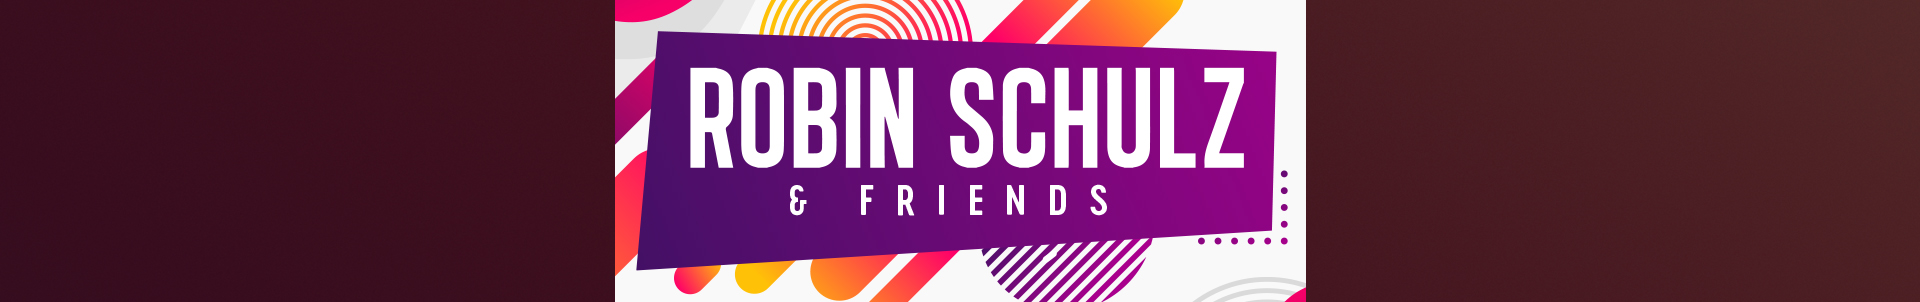 Robin Schulz & Friends also presents its Miami line-up